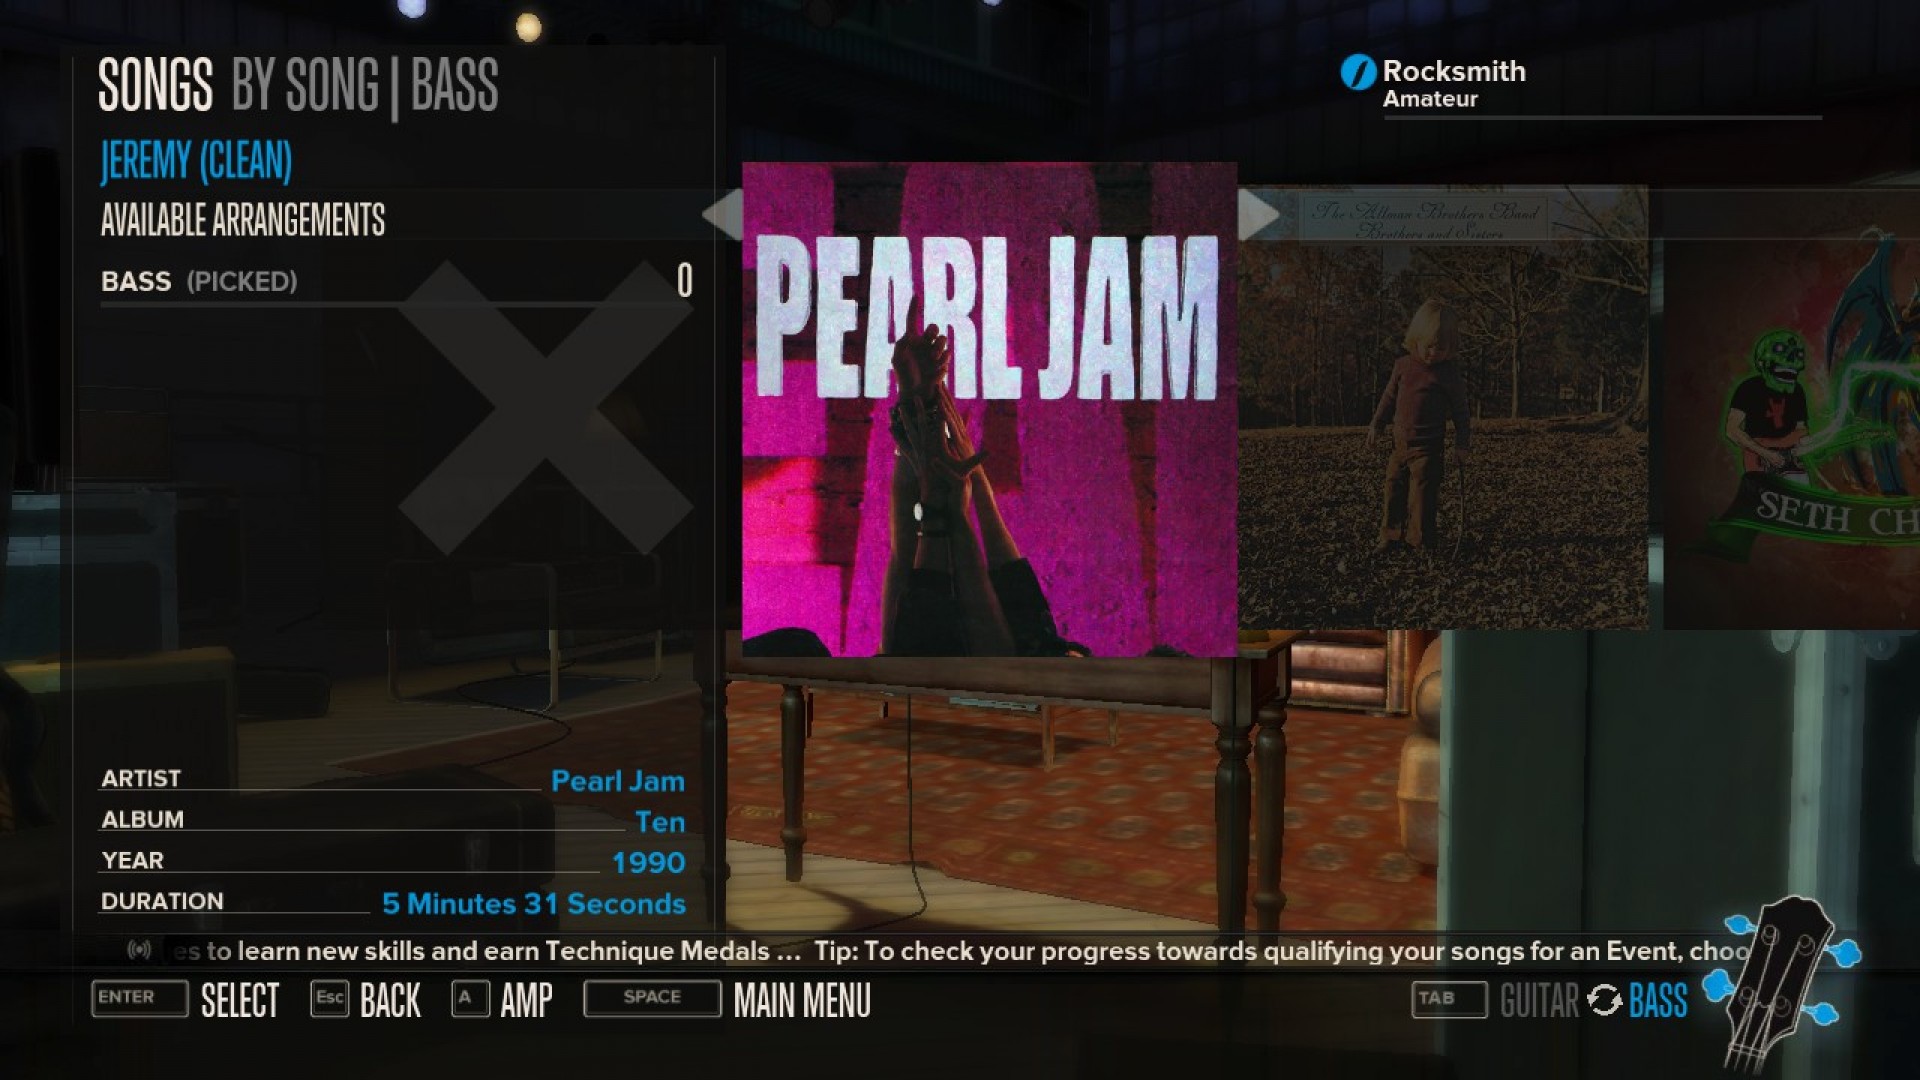 Rocksmith - Pearl Jam - Jeremy screenshot